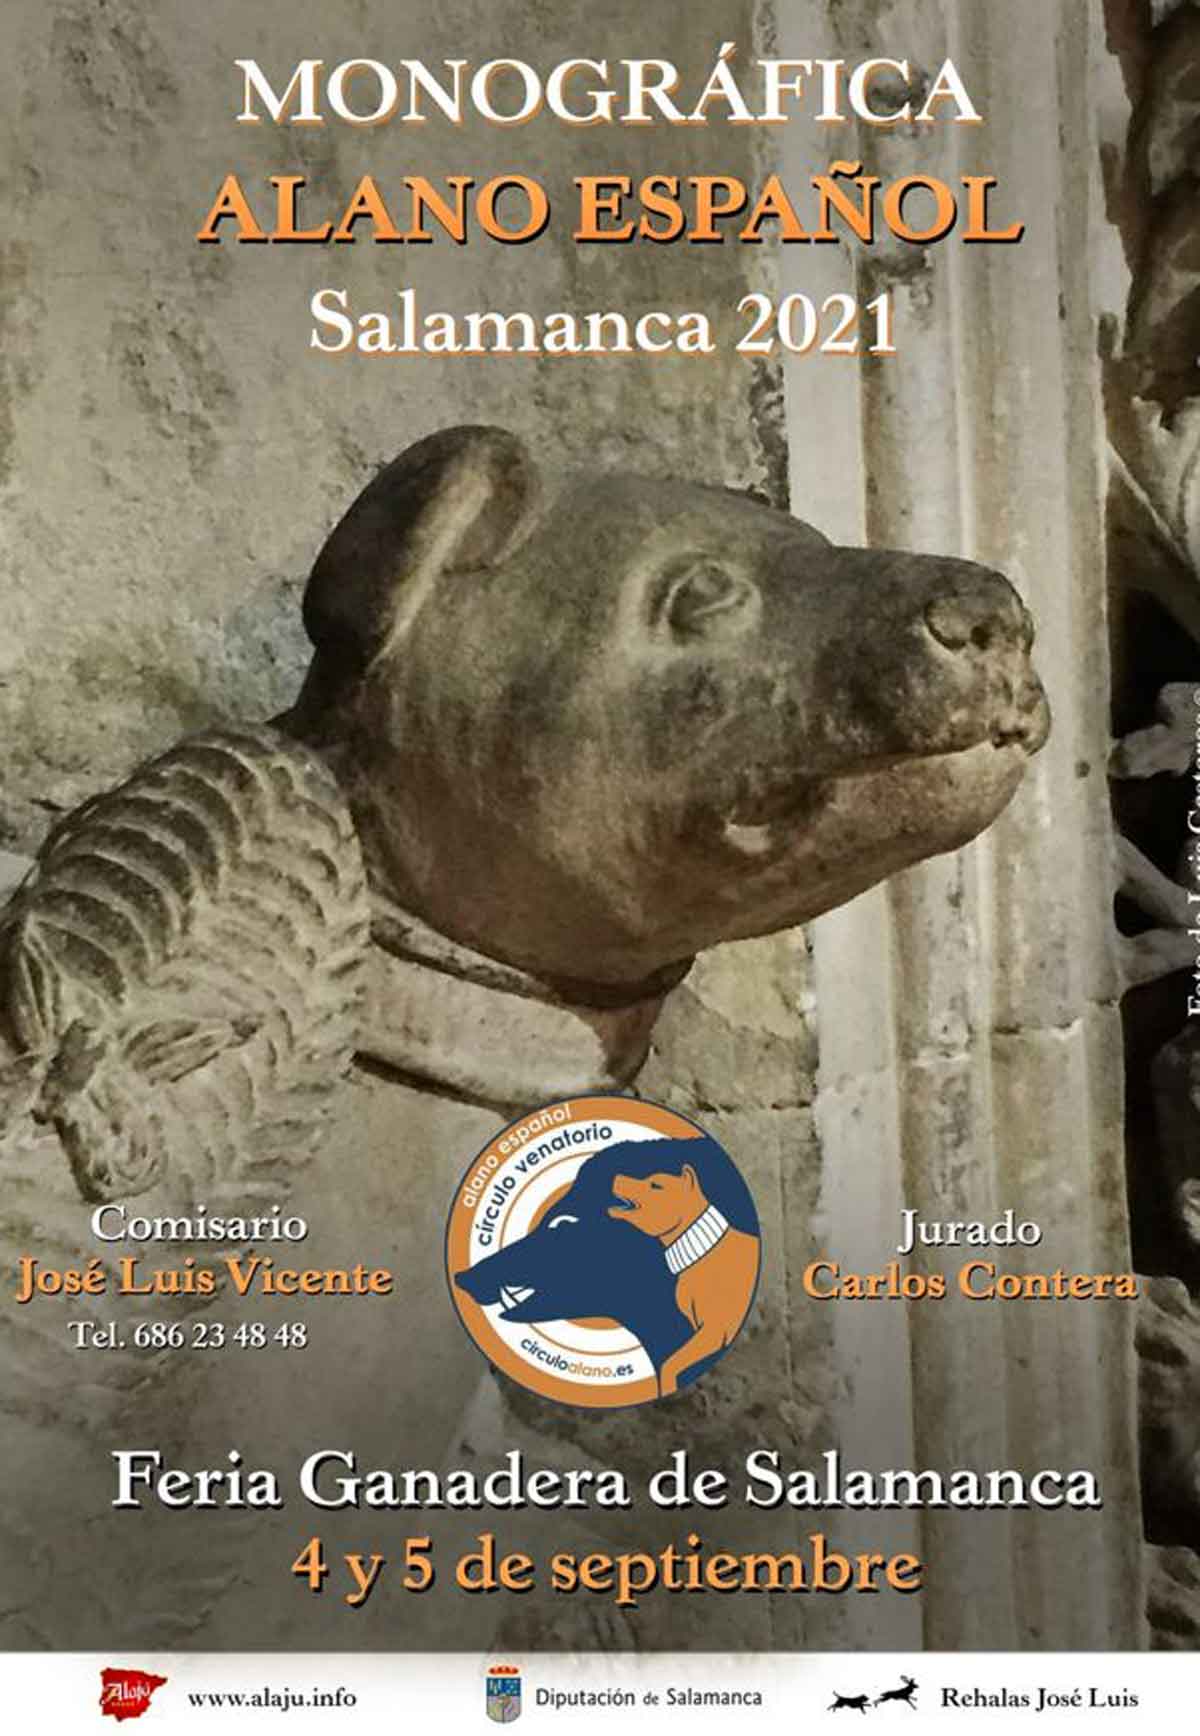 Monográfica Alano 2021 Salamanca